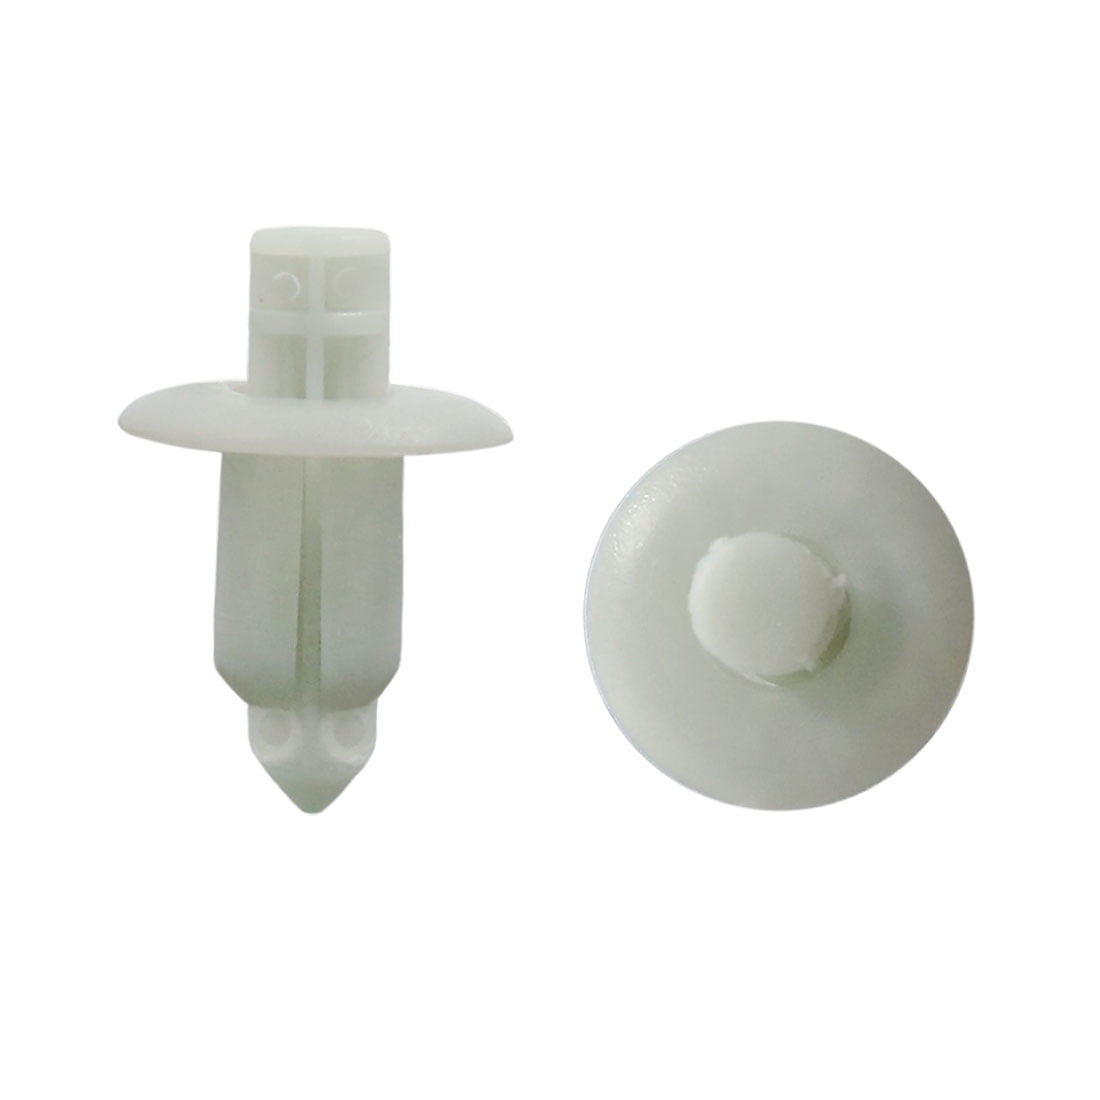 50pcs Push Pin Type Plastic Rivets Retainer Fastener Bumper Clip Light Gray 7mm 